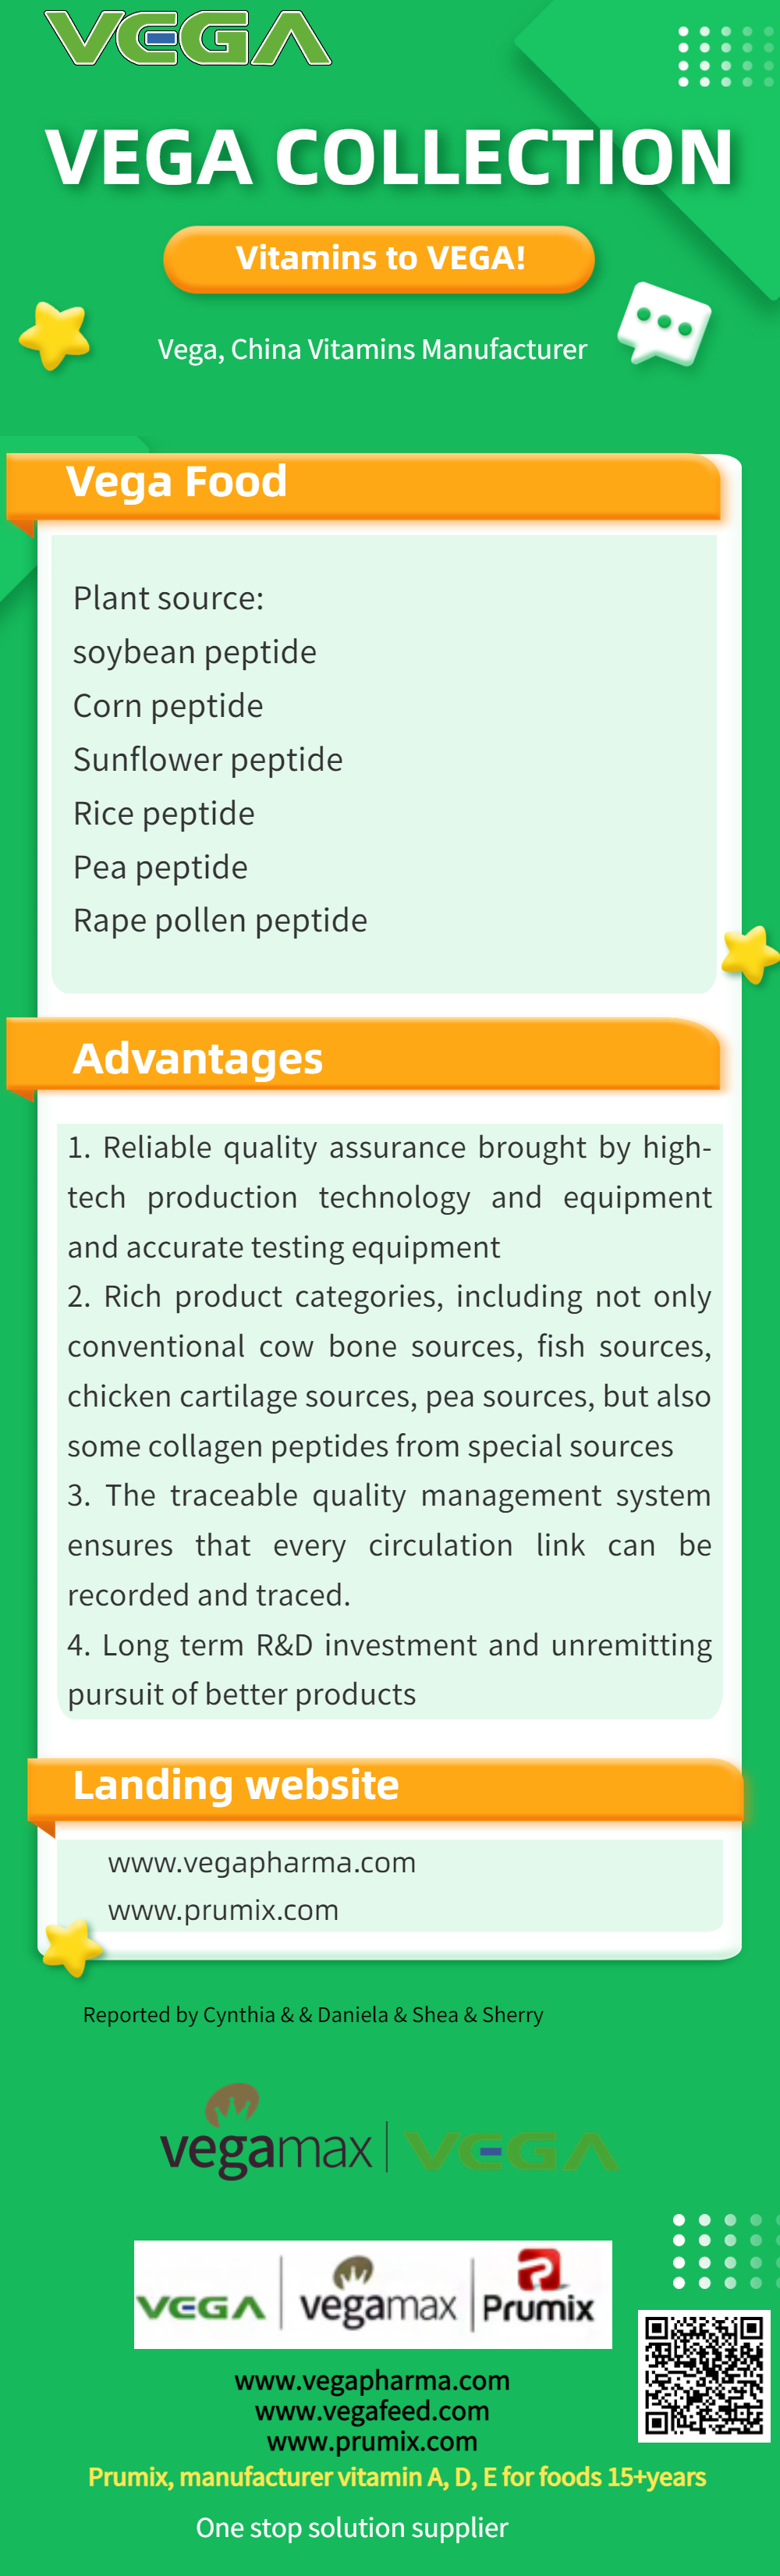 soybean peptide Corn peptide Sunflower peptide Rice peptide Pea peptide.jpg